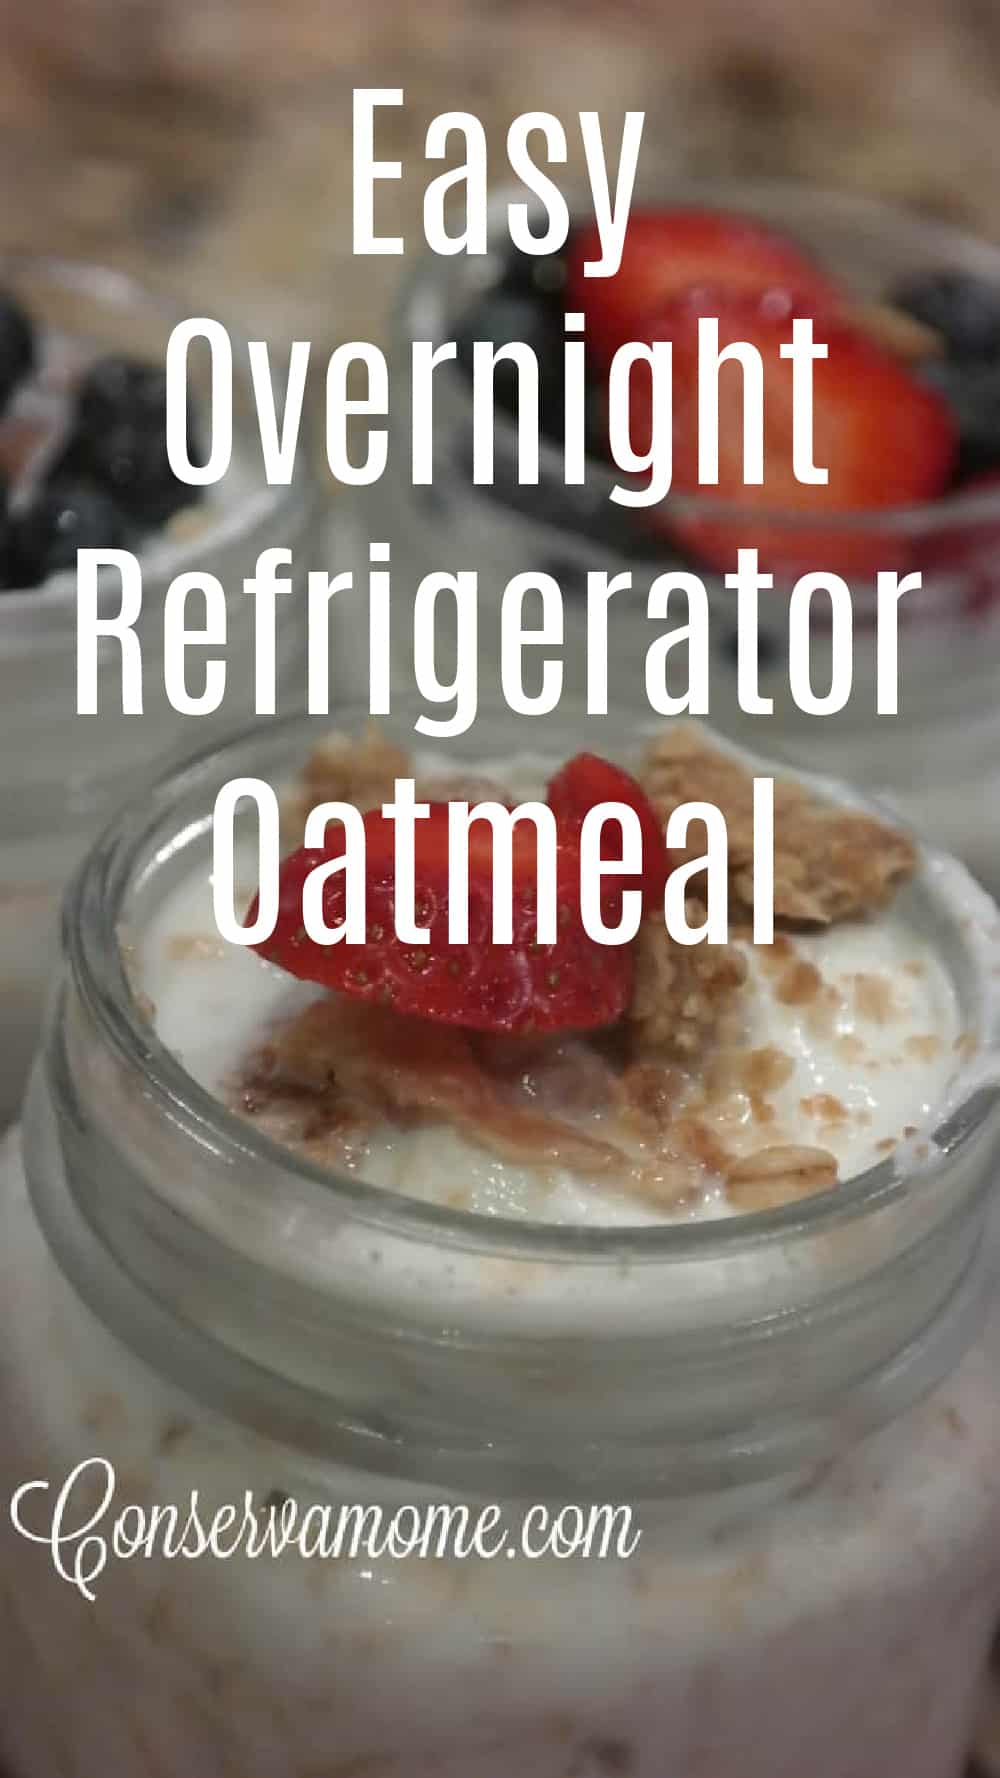 Easy Overnight Refrigerator Oatmeal